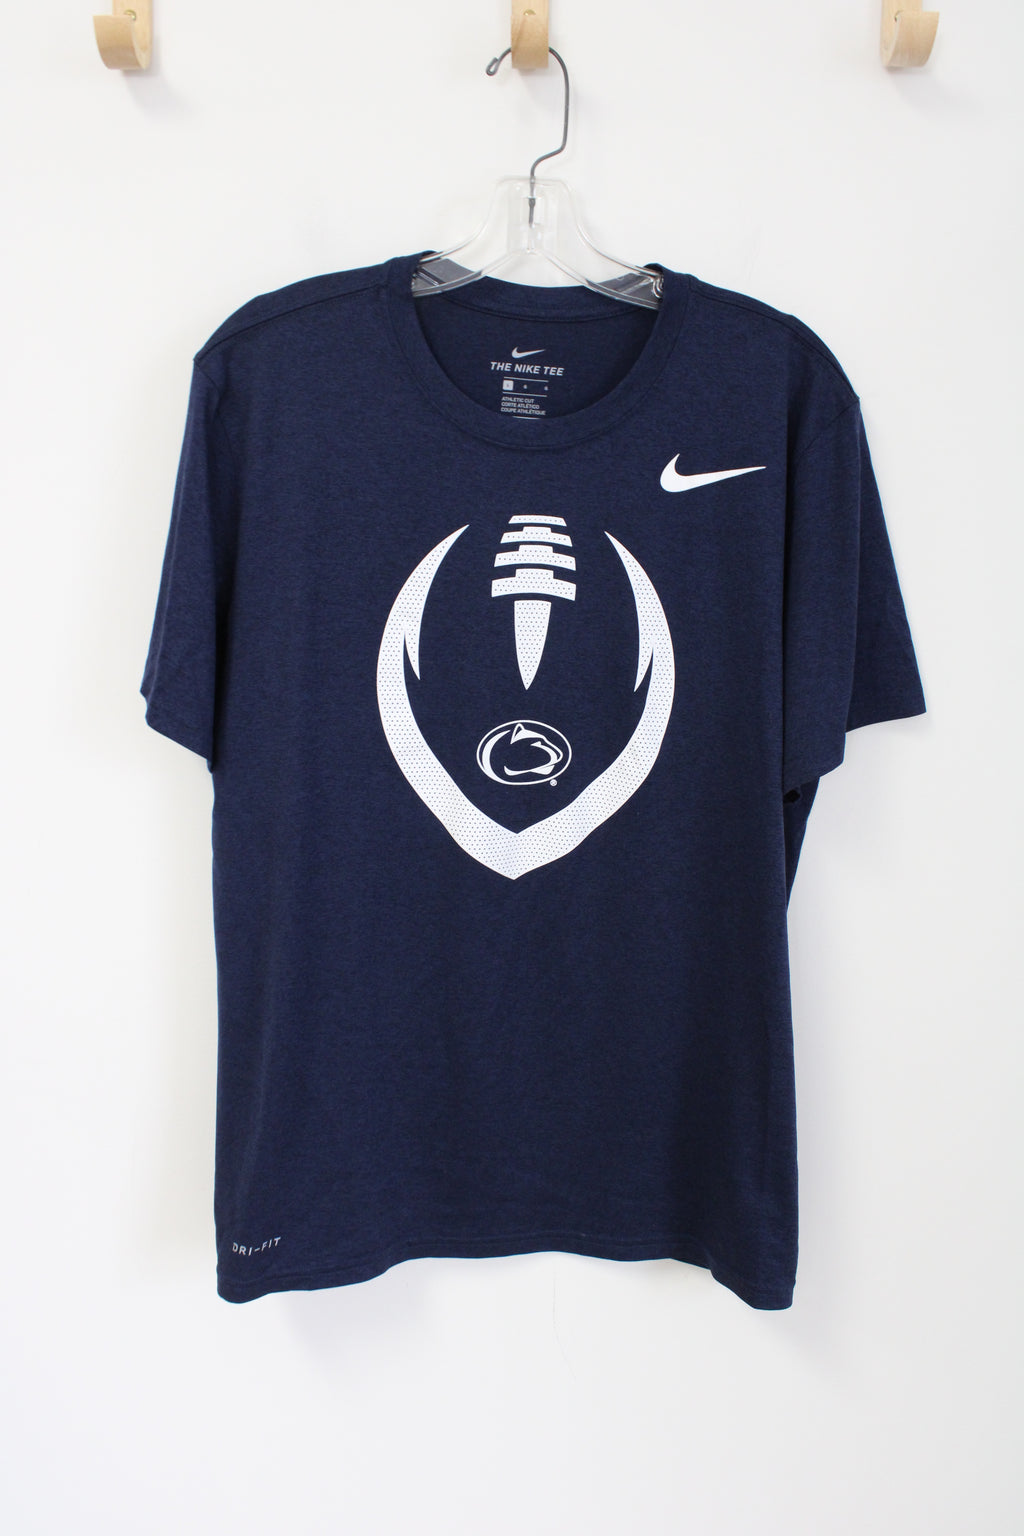 The Nike Tee Penn State Football Shirt | L